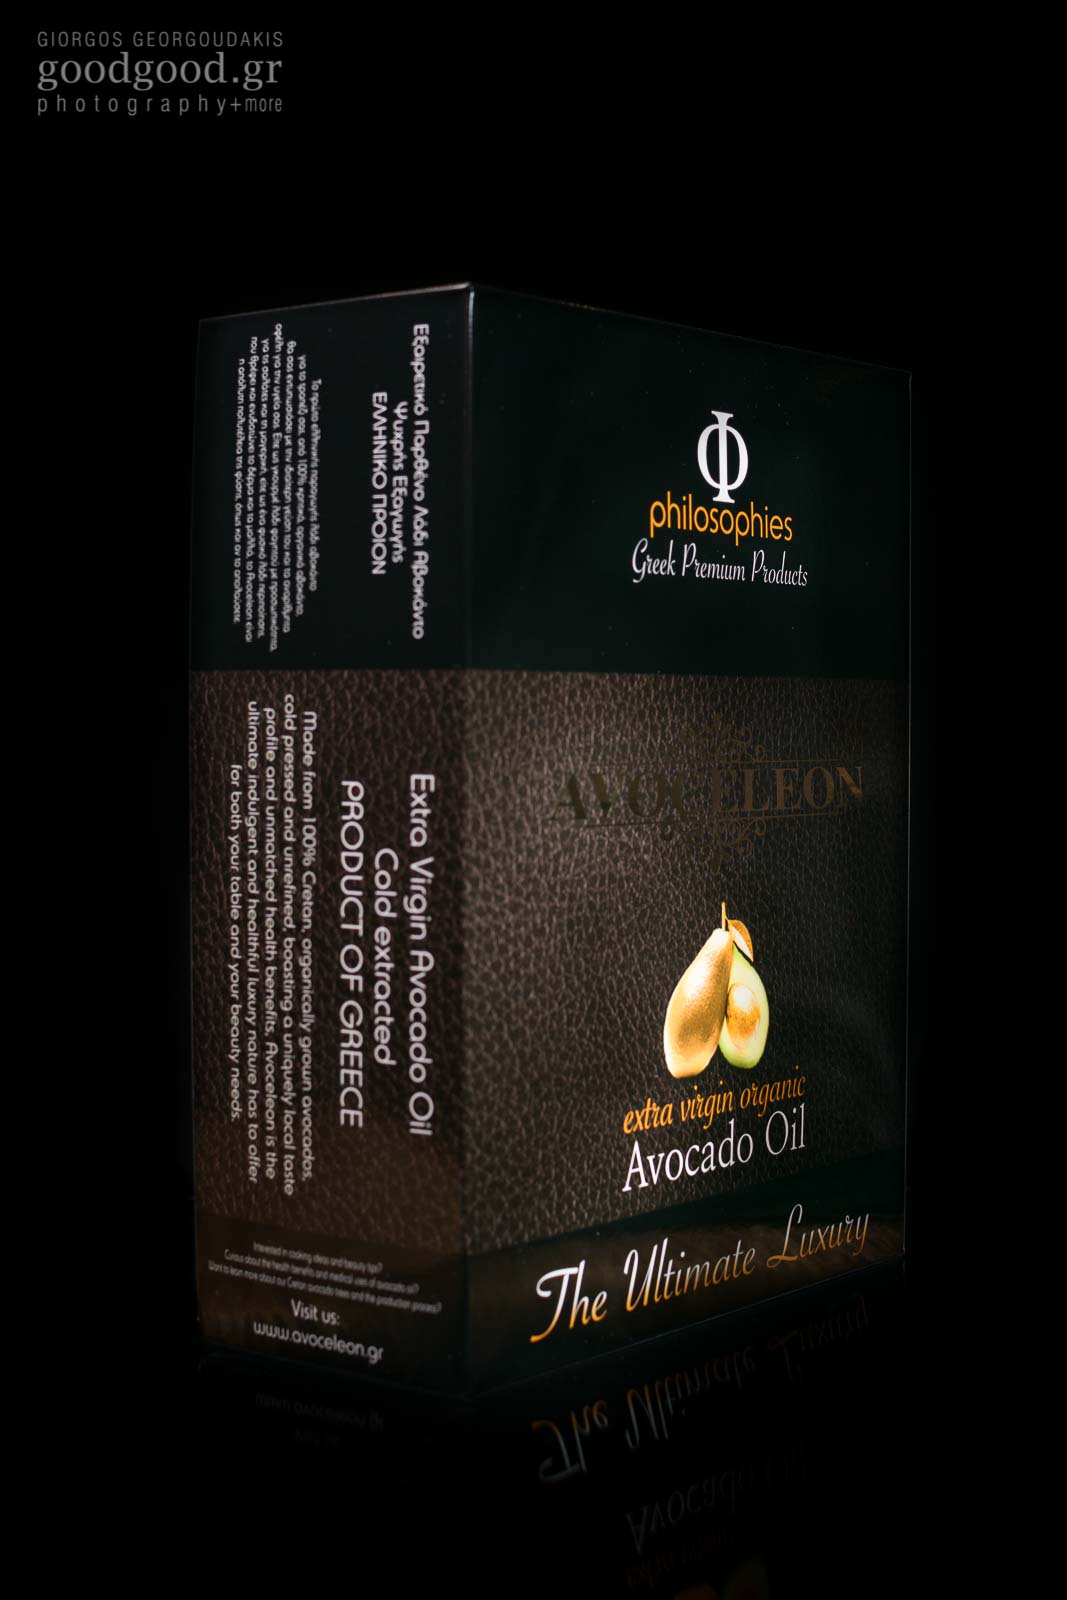 Avoceleon, avocado oil premium package, product photographed in dark background